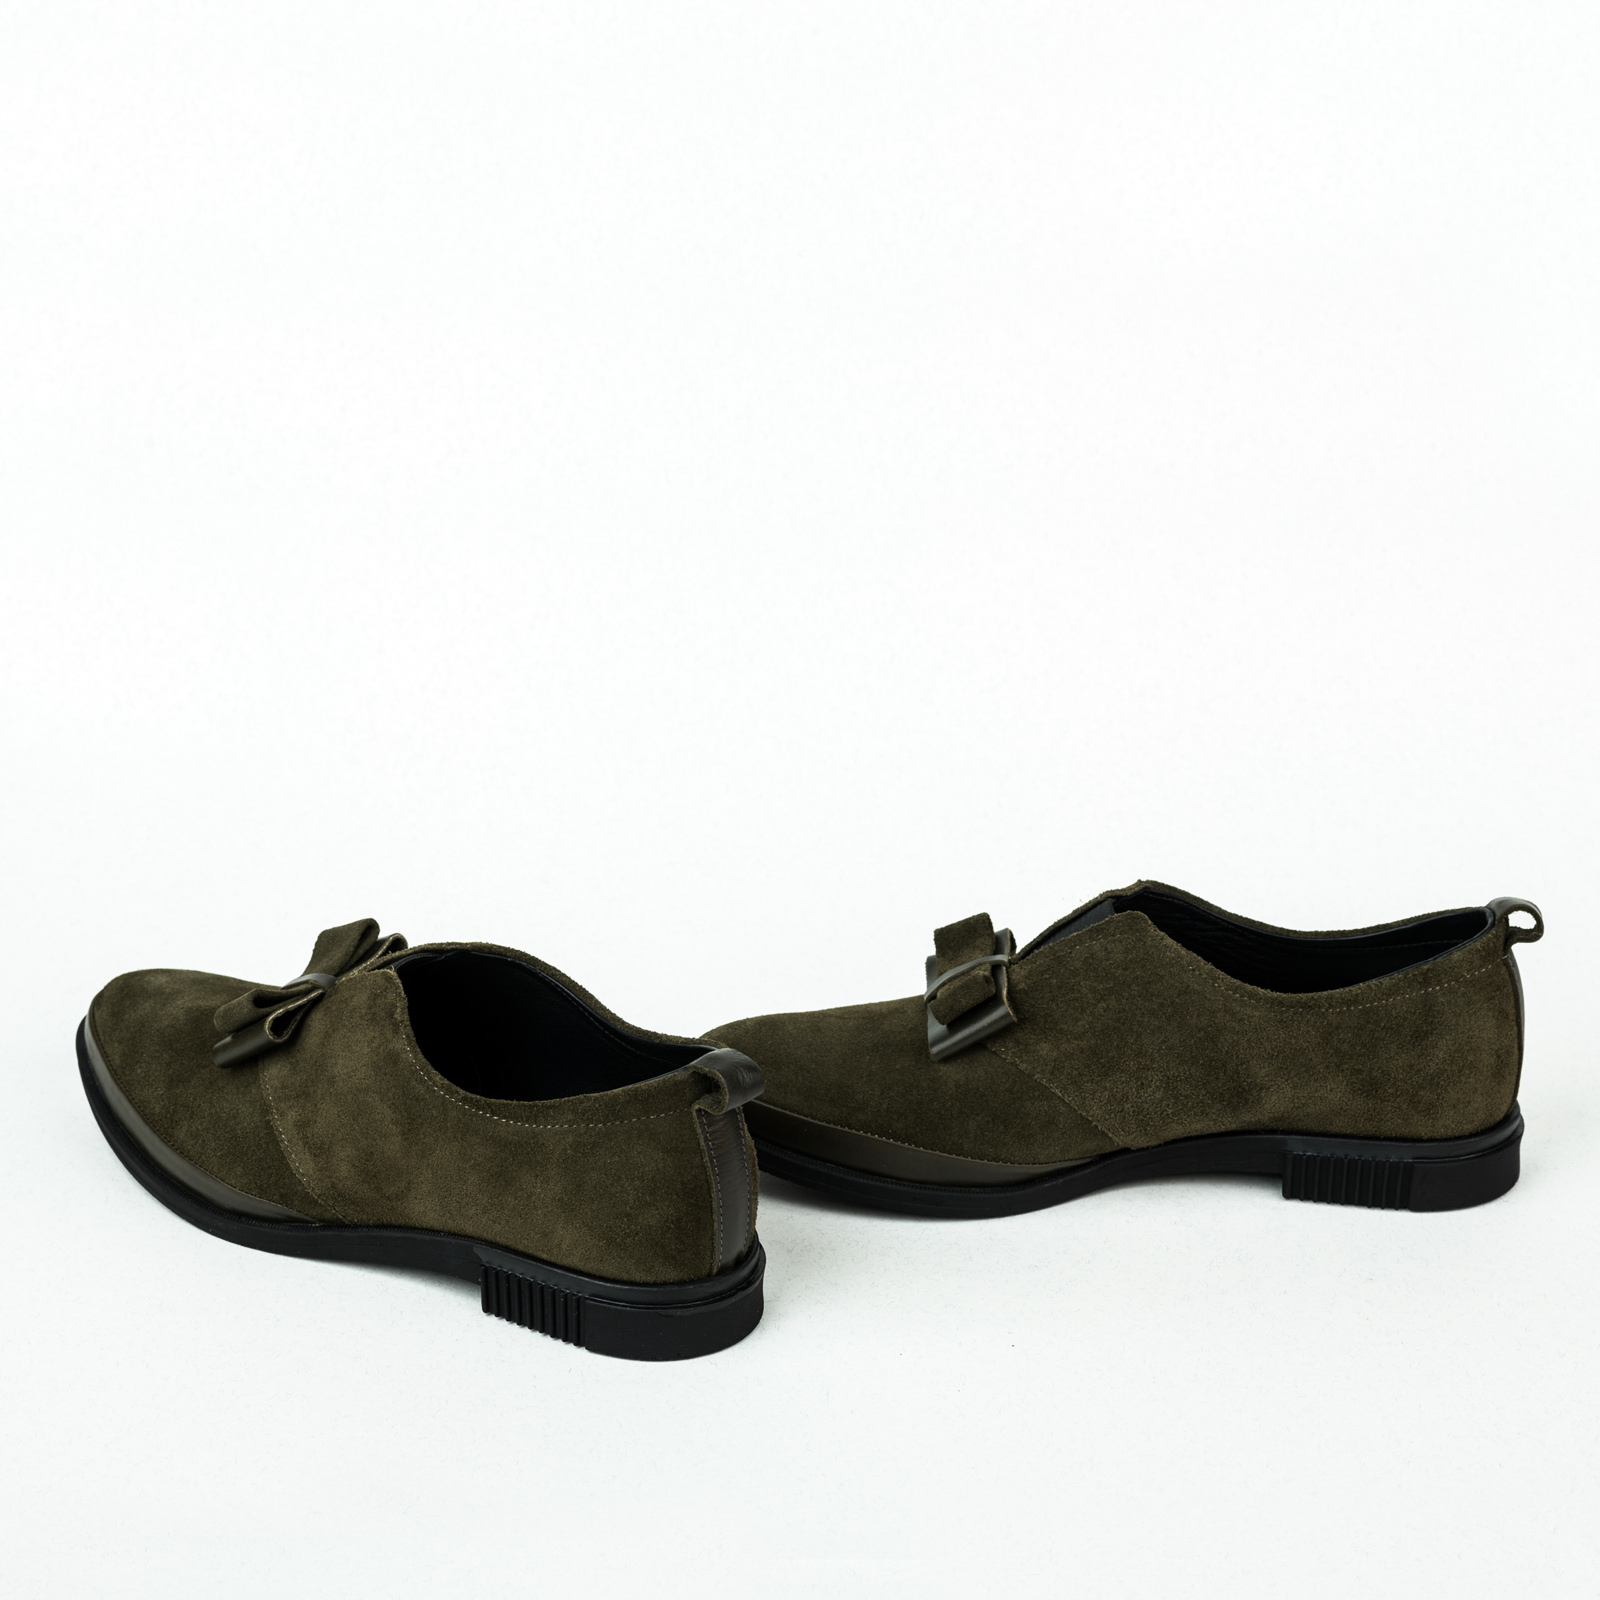 Leather shoes & flats B016 - DARK GREEN